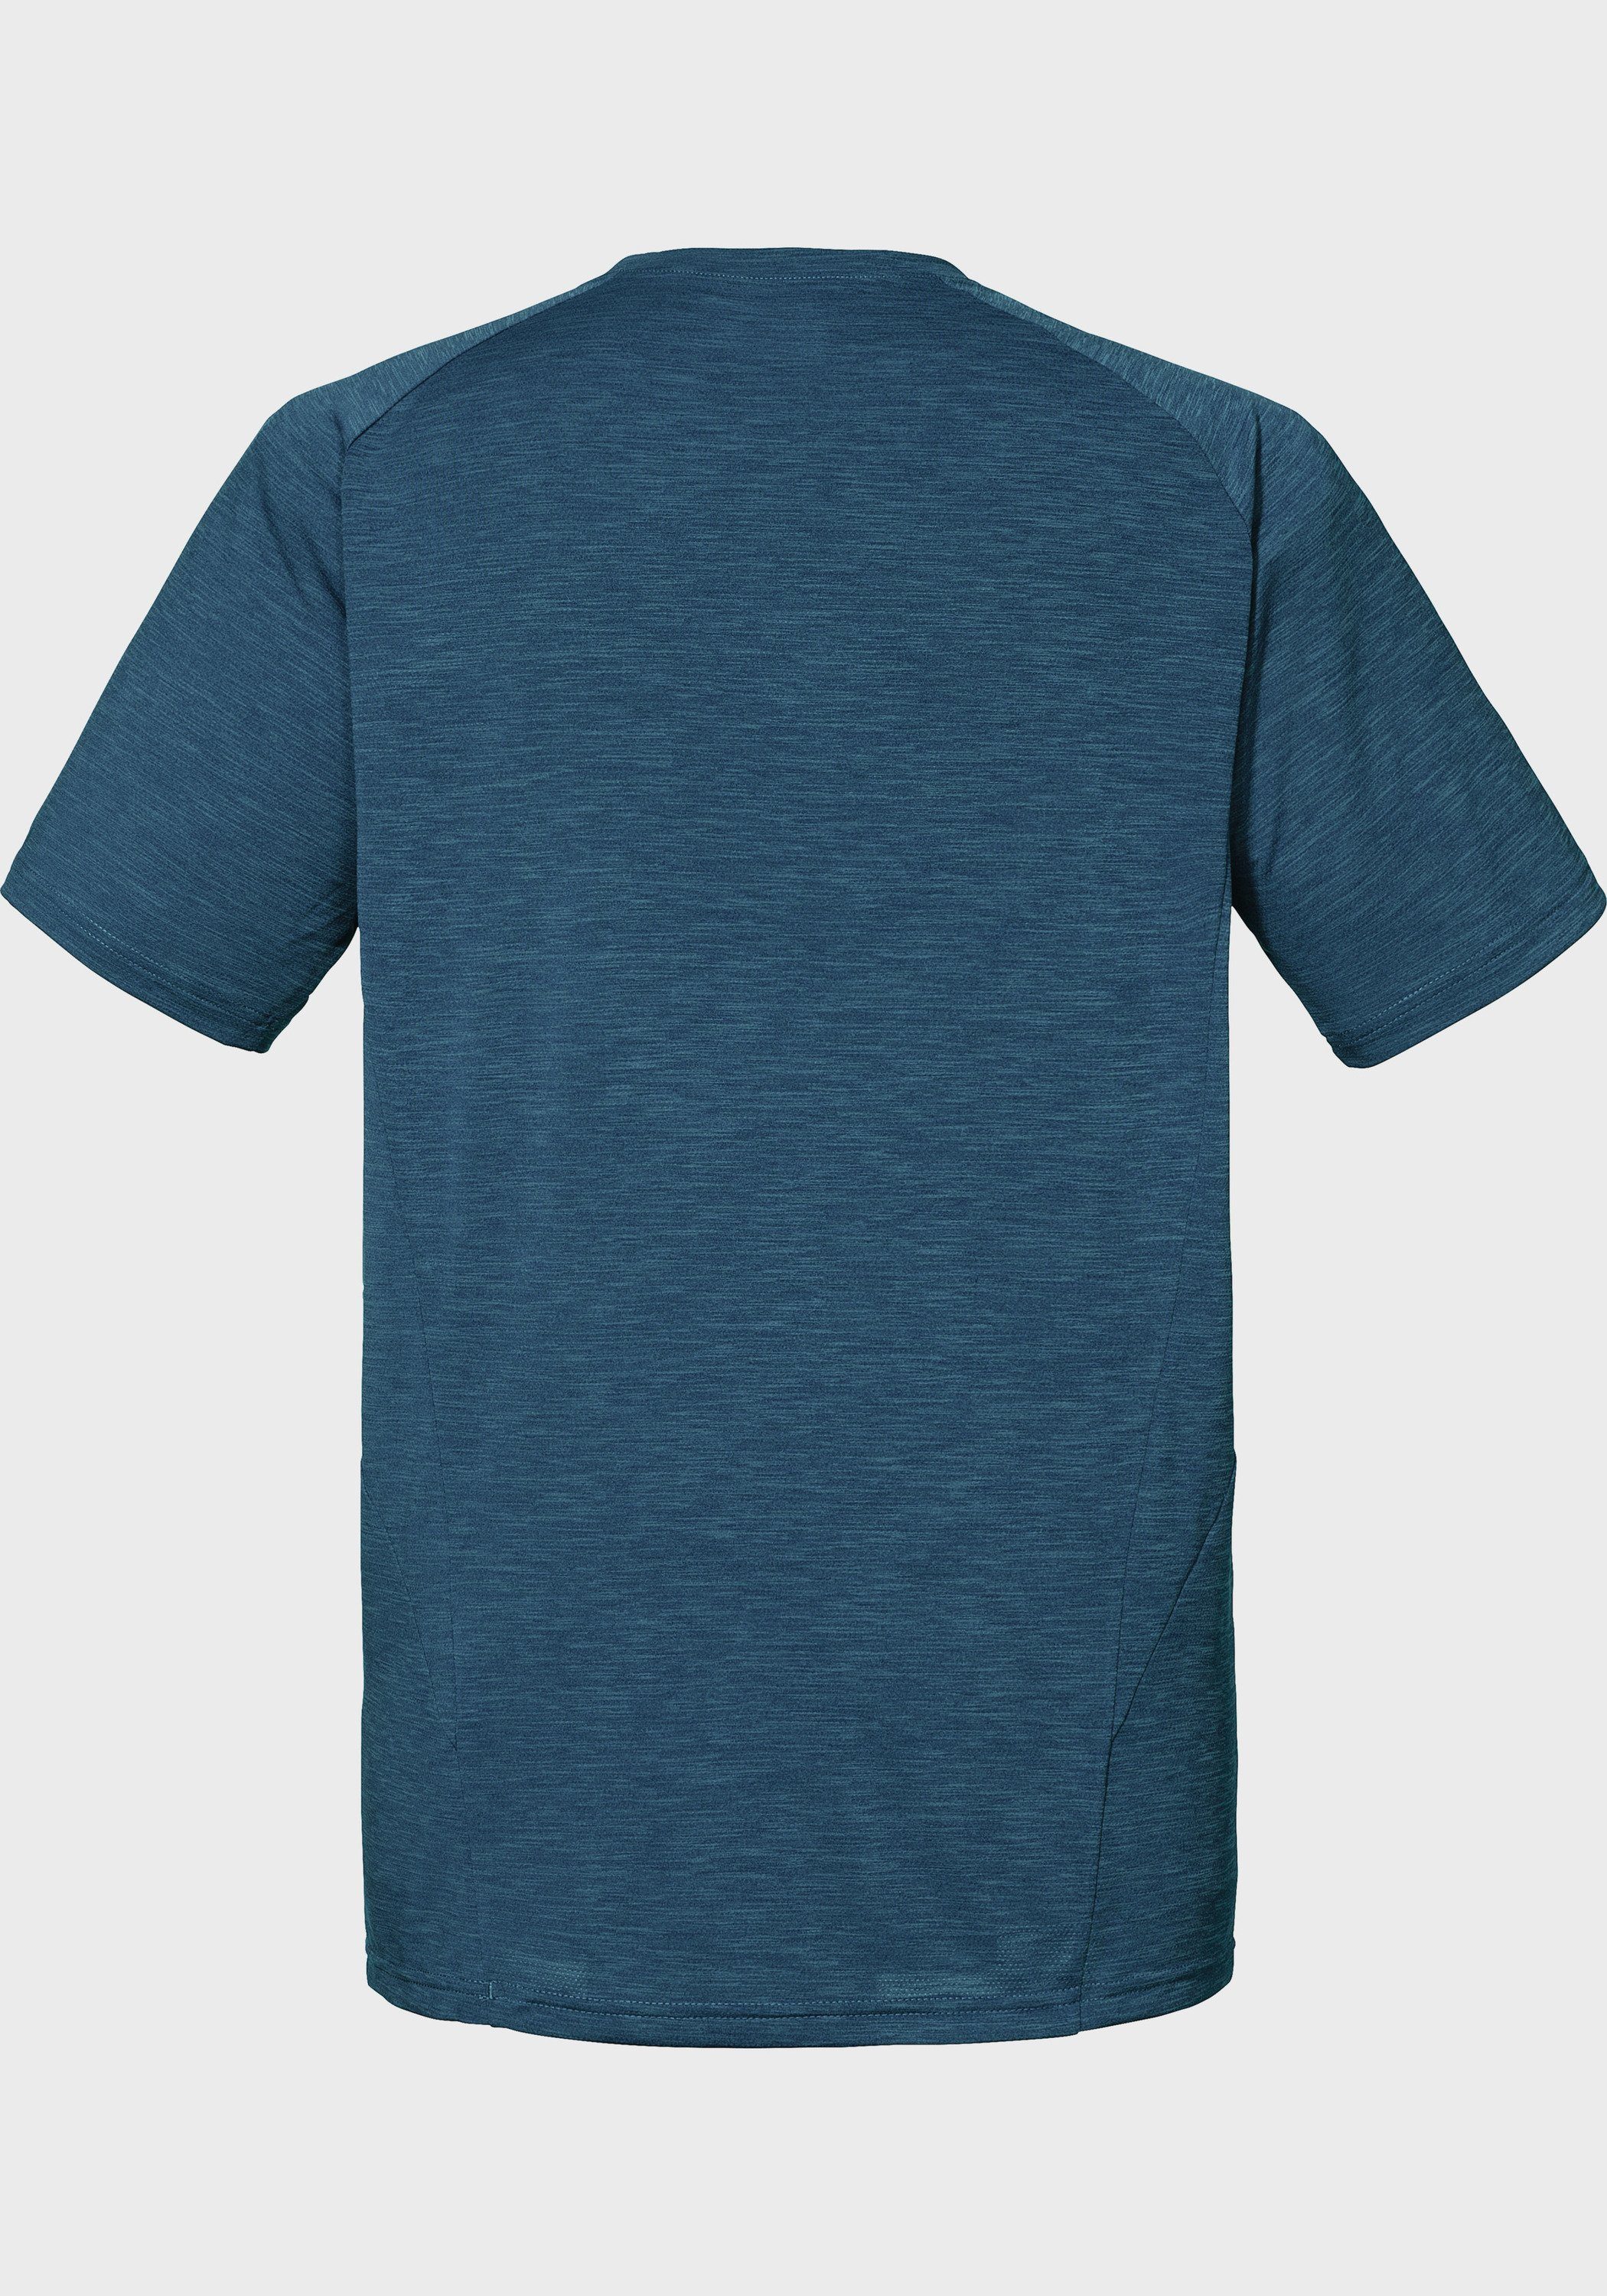 Schöffel Funktionsshirt T Shirt blau Boise2 M